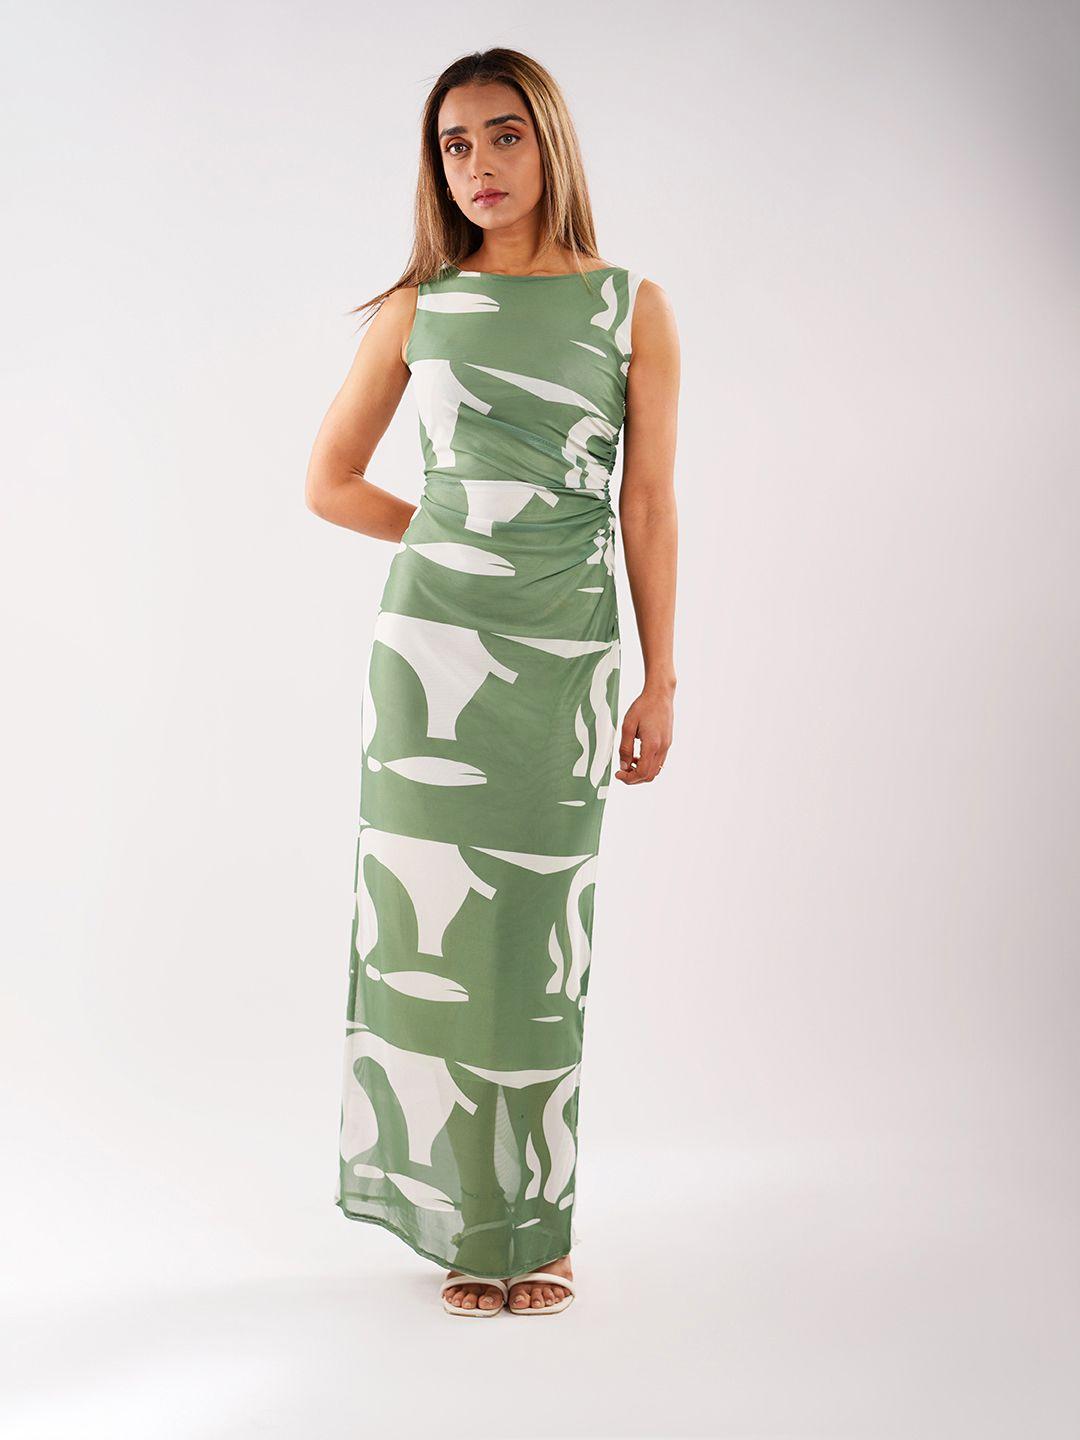 stylecast x hersheinbox printed maxi dress